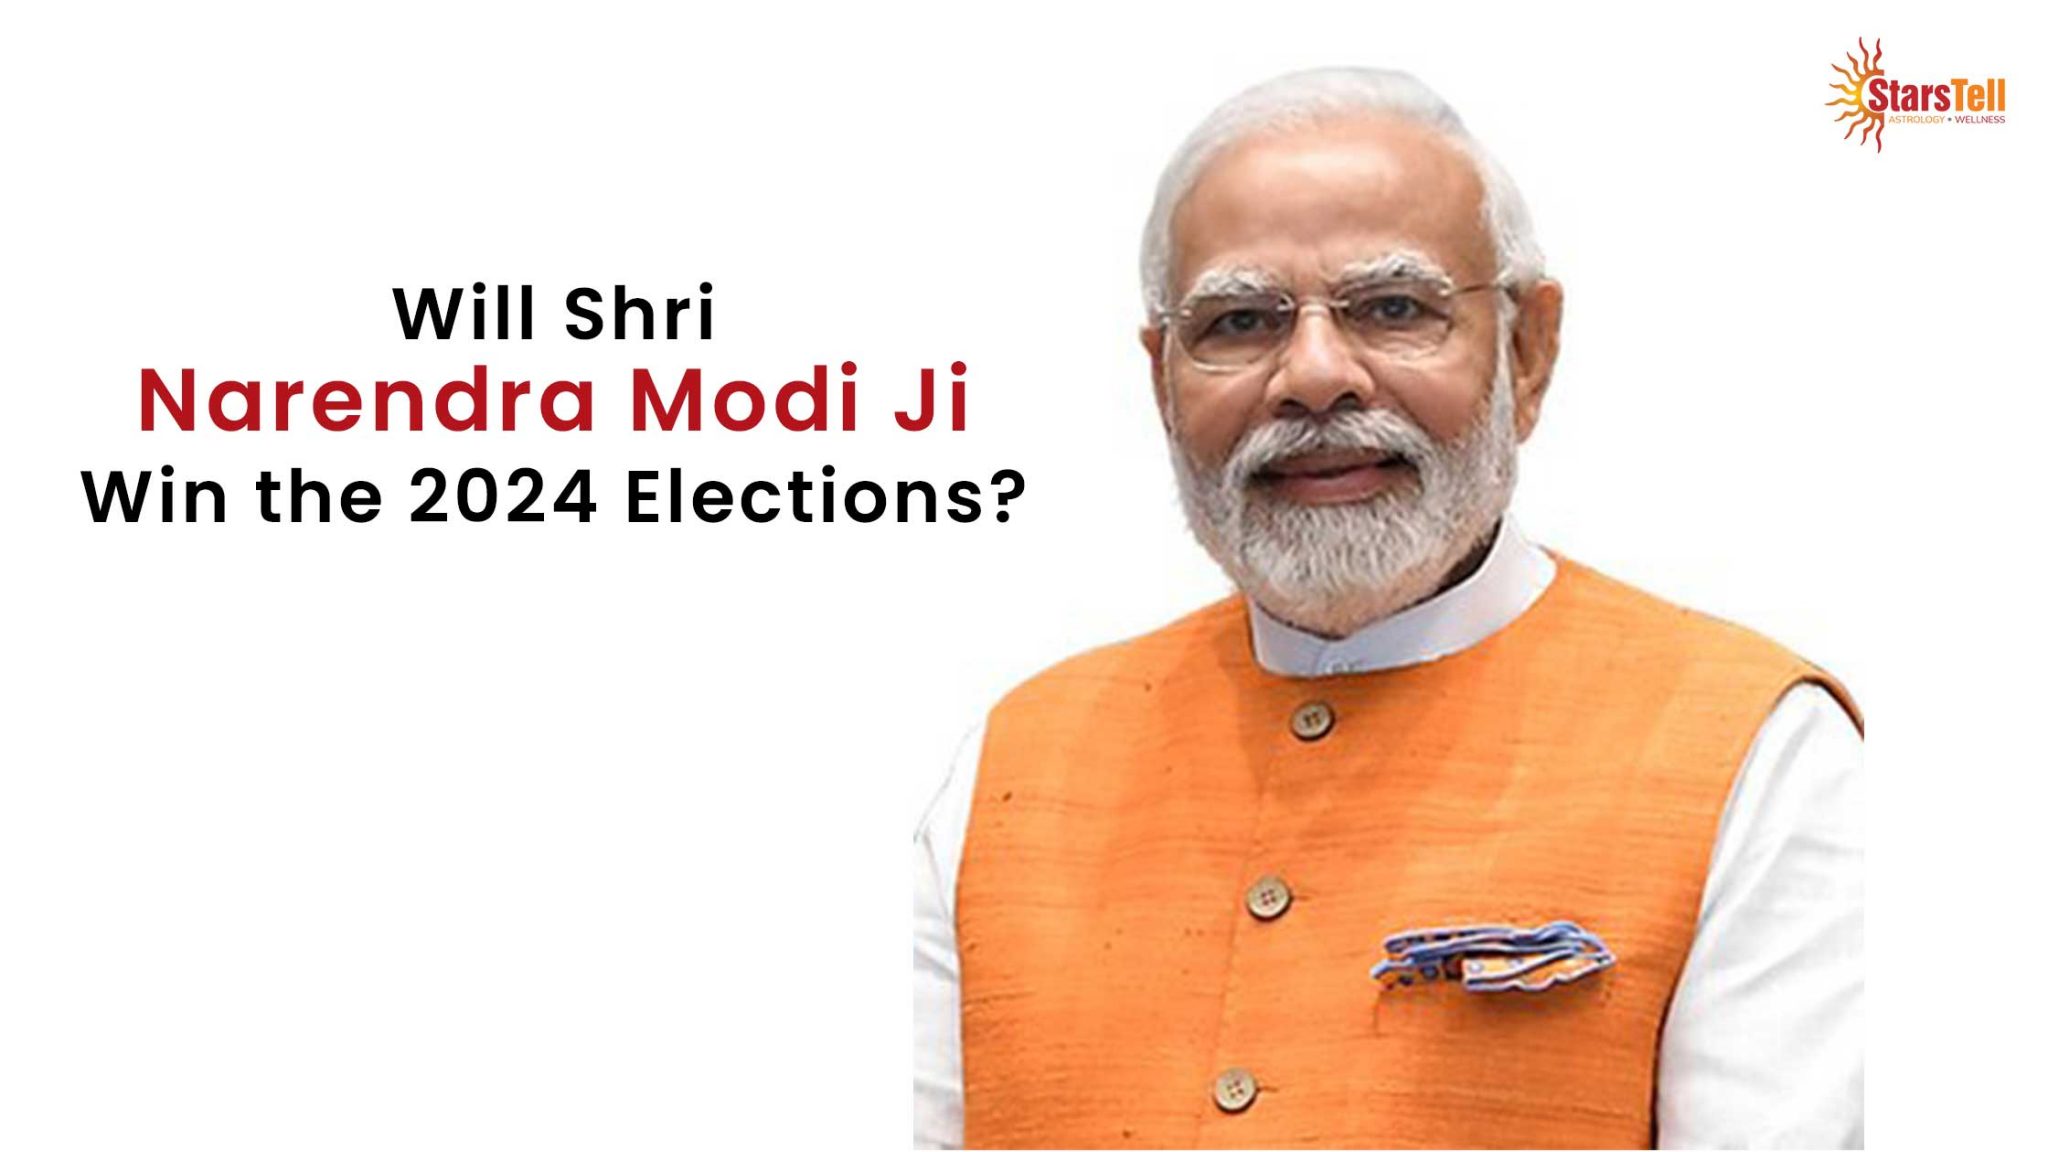 Will Shri Narendra Modi Ji Win the 2024 Elections?